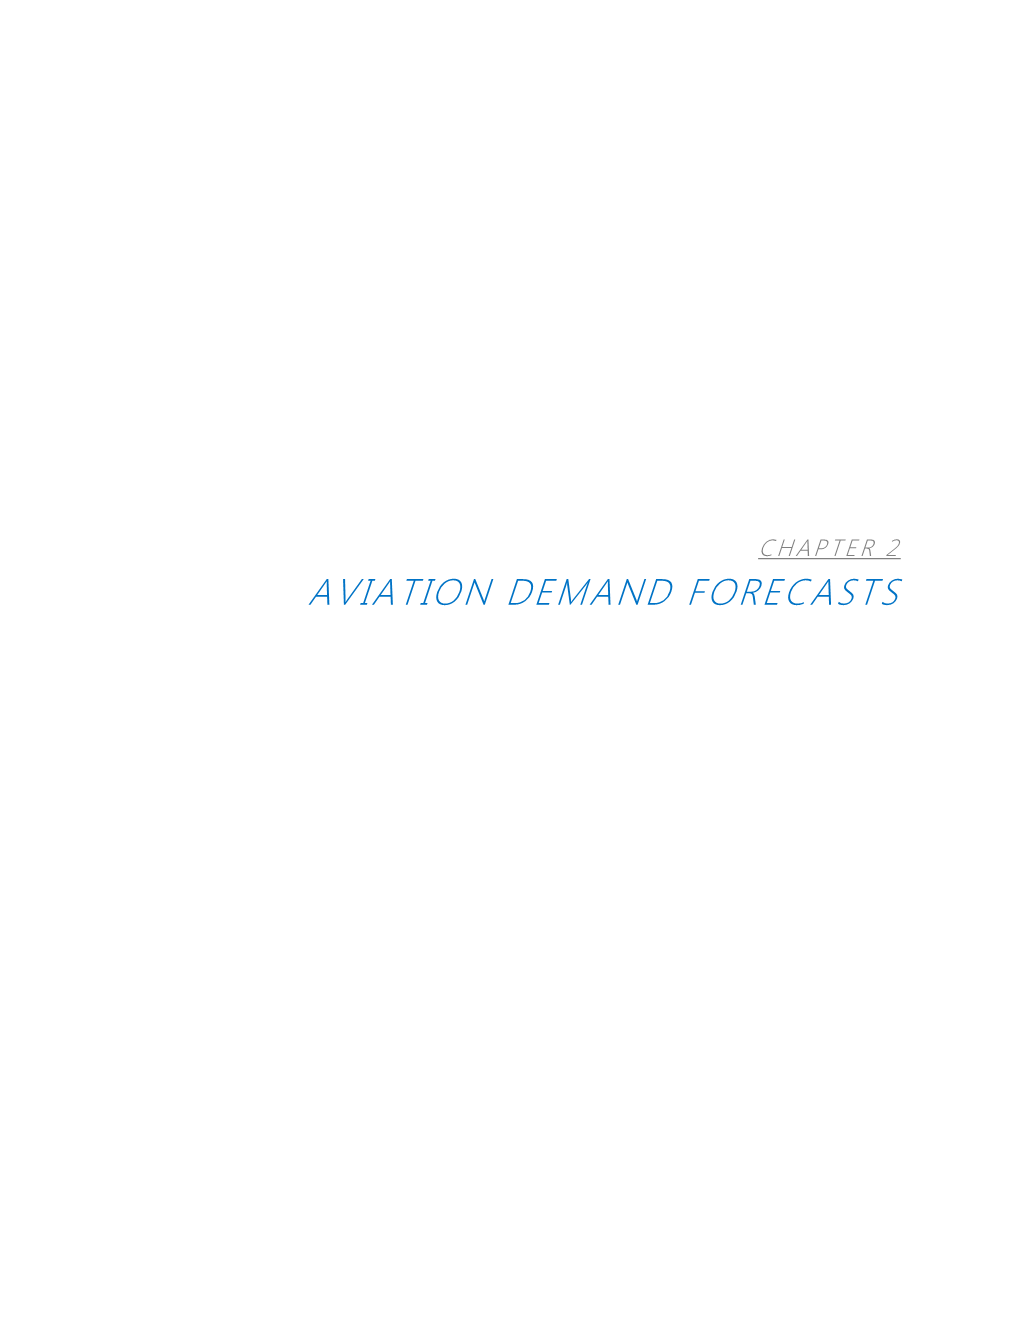 Aviation Demand Forecasts